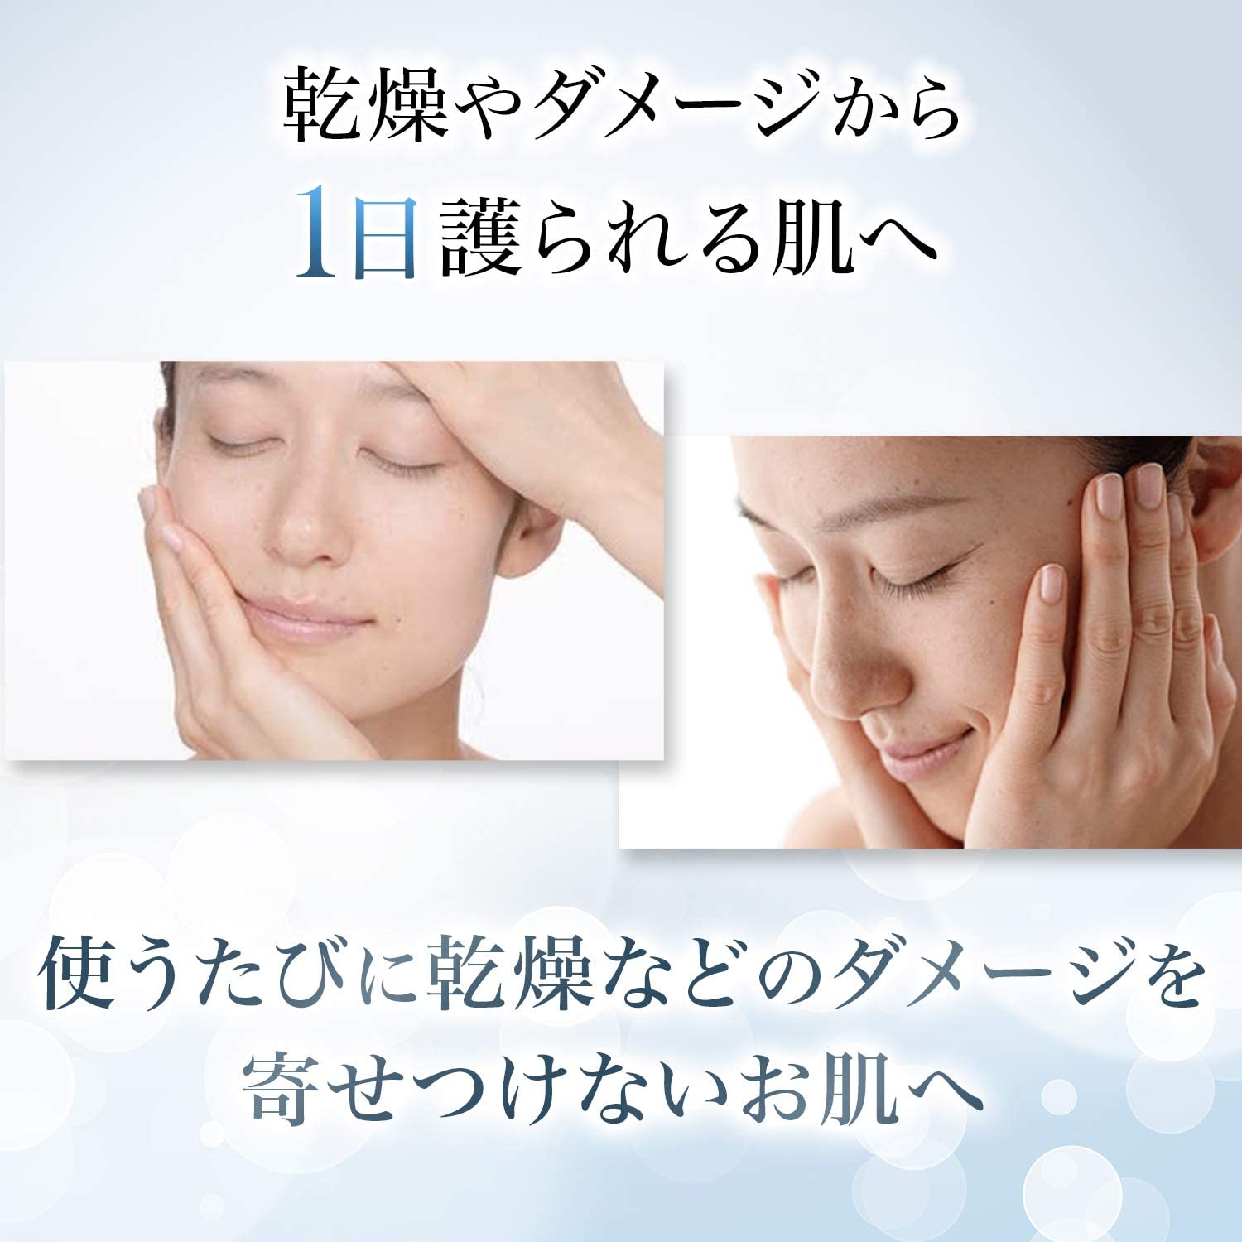 Domohorn Wrinkle(ドモホルンリンクル) 保護乳液の商品画像サムネ4 